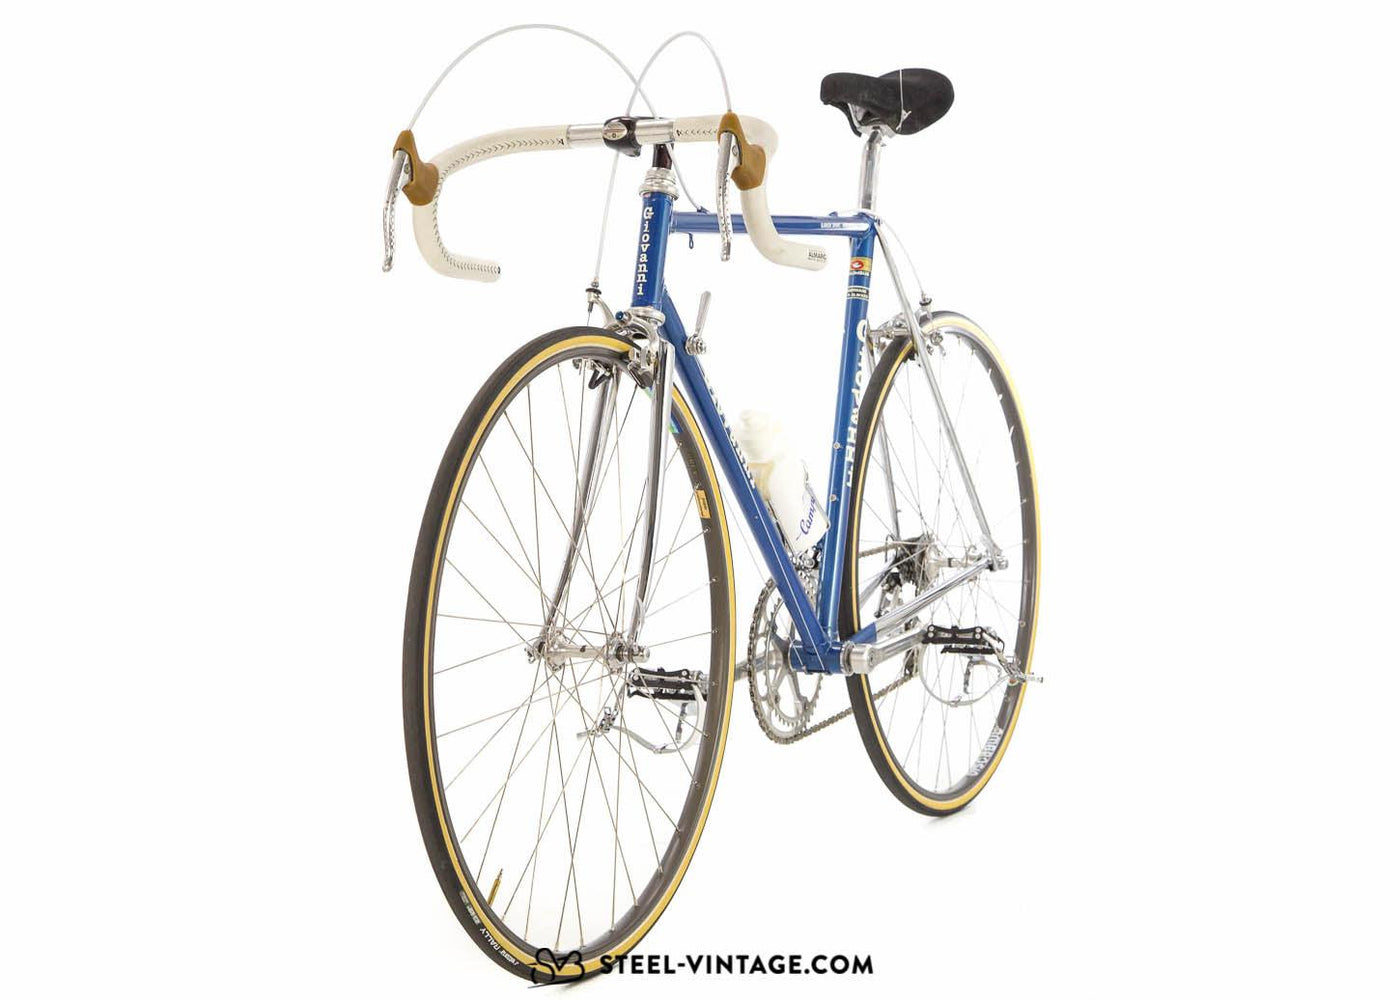 Martelly Giovanni Road Bike 1980s - Steel Vintage Bikes